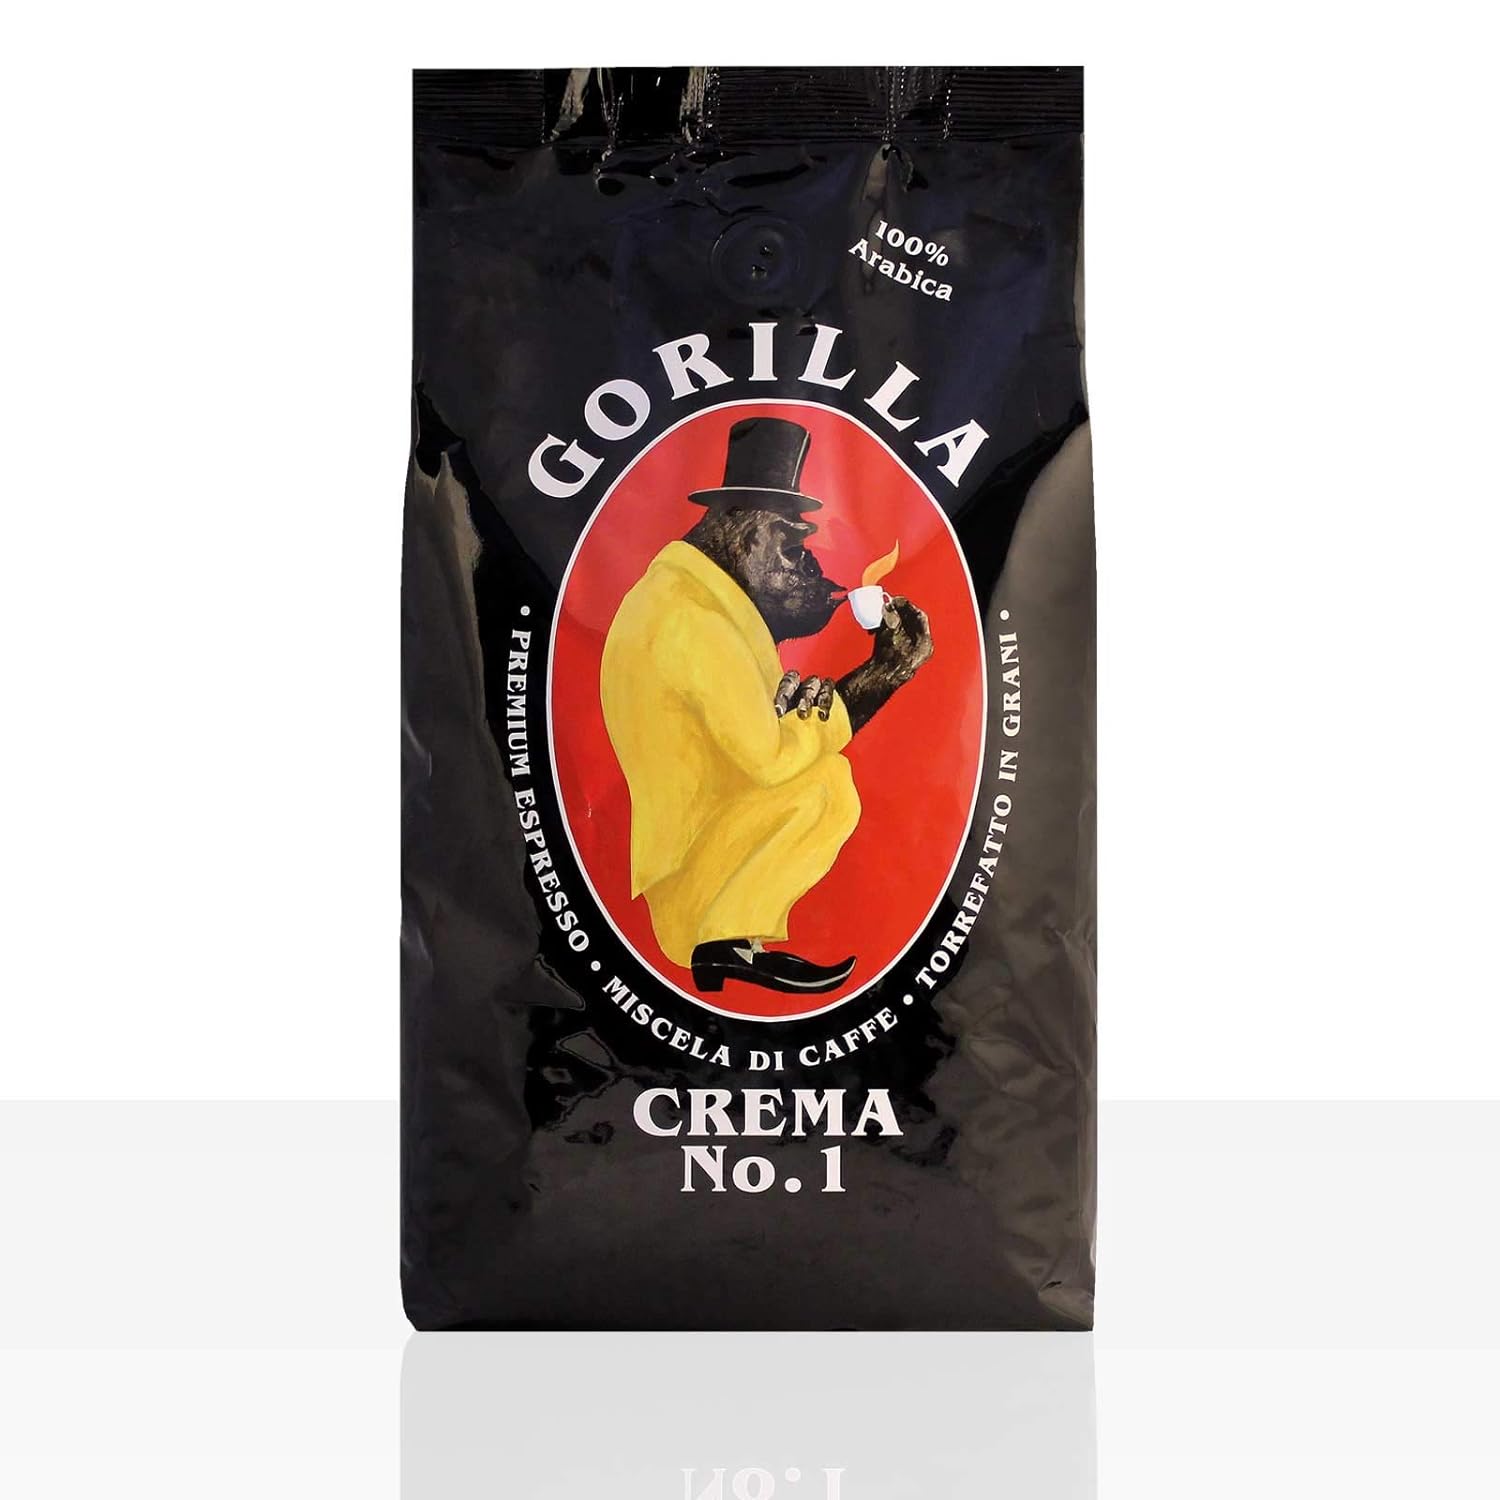 Gorilla espresso crema n ° 1 coffee 12 x 1kg whole bean